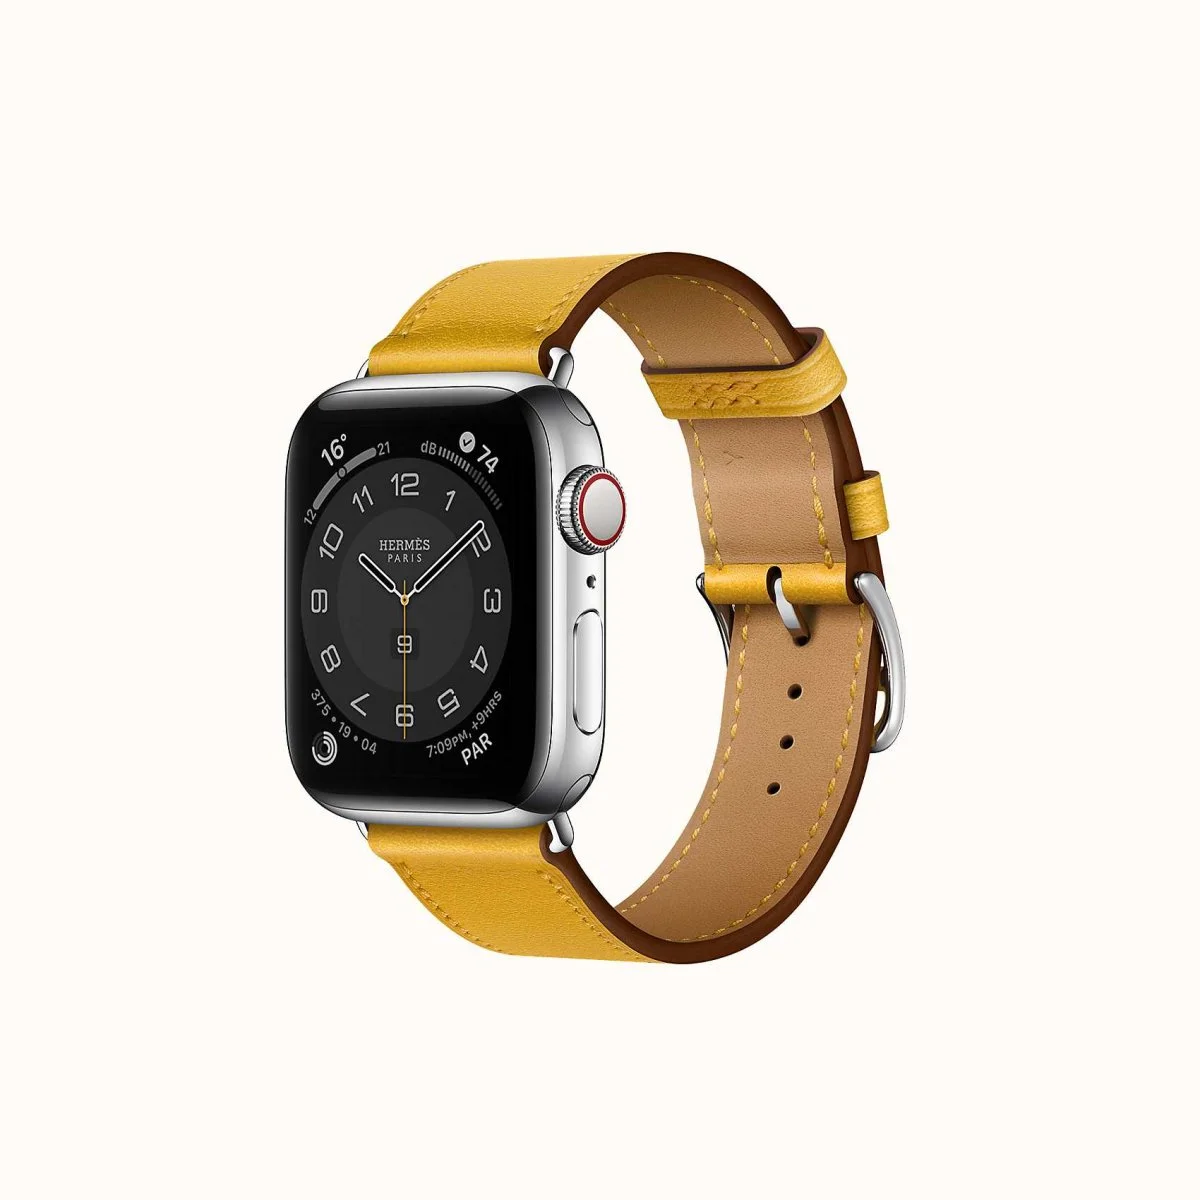 Řemínek iMore Single Tour Apple Watch Series 4/5/6/SE /40mm) - Žlutý